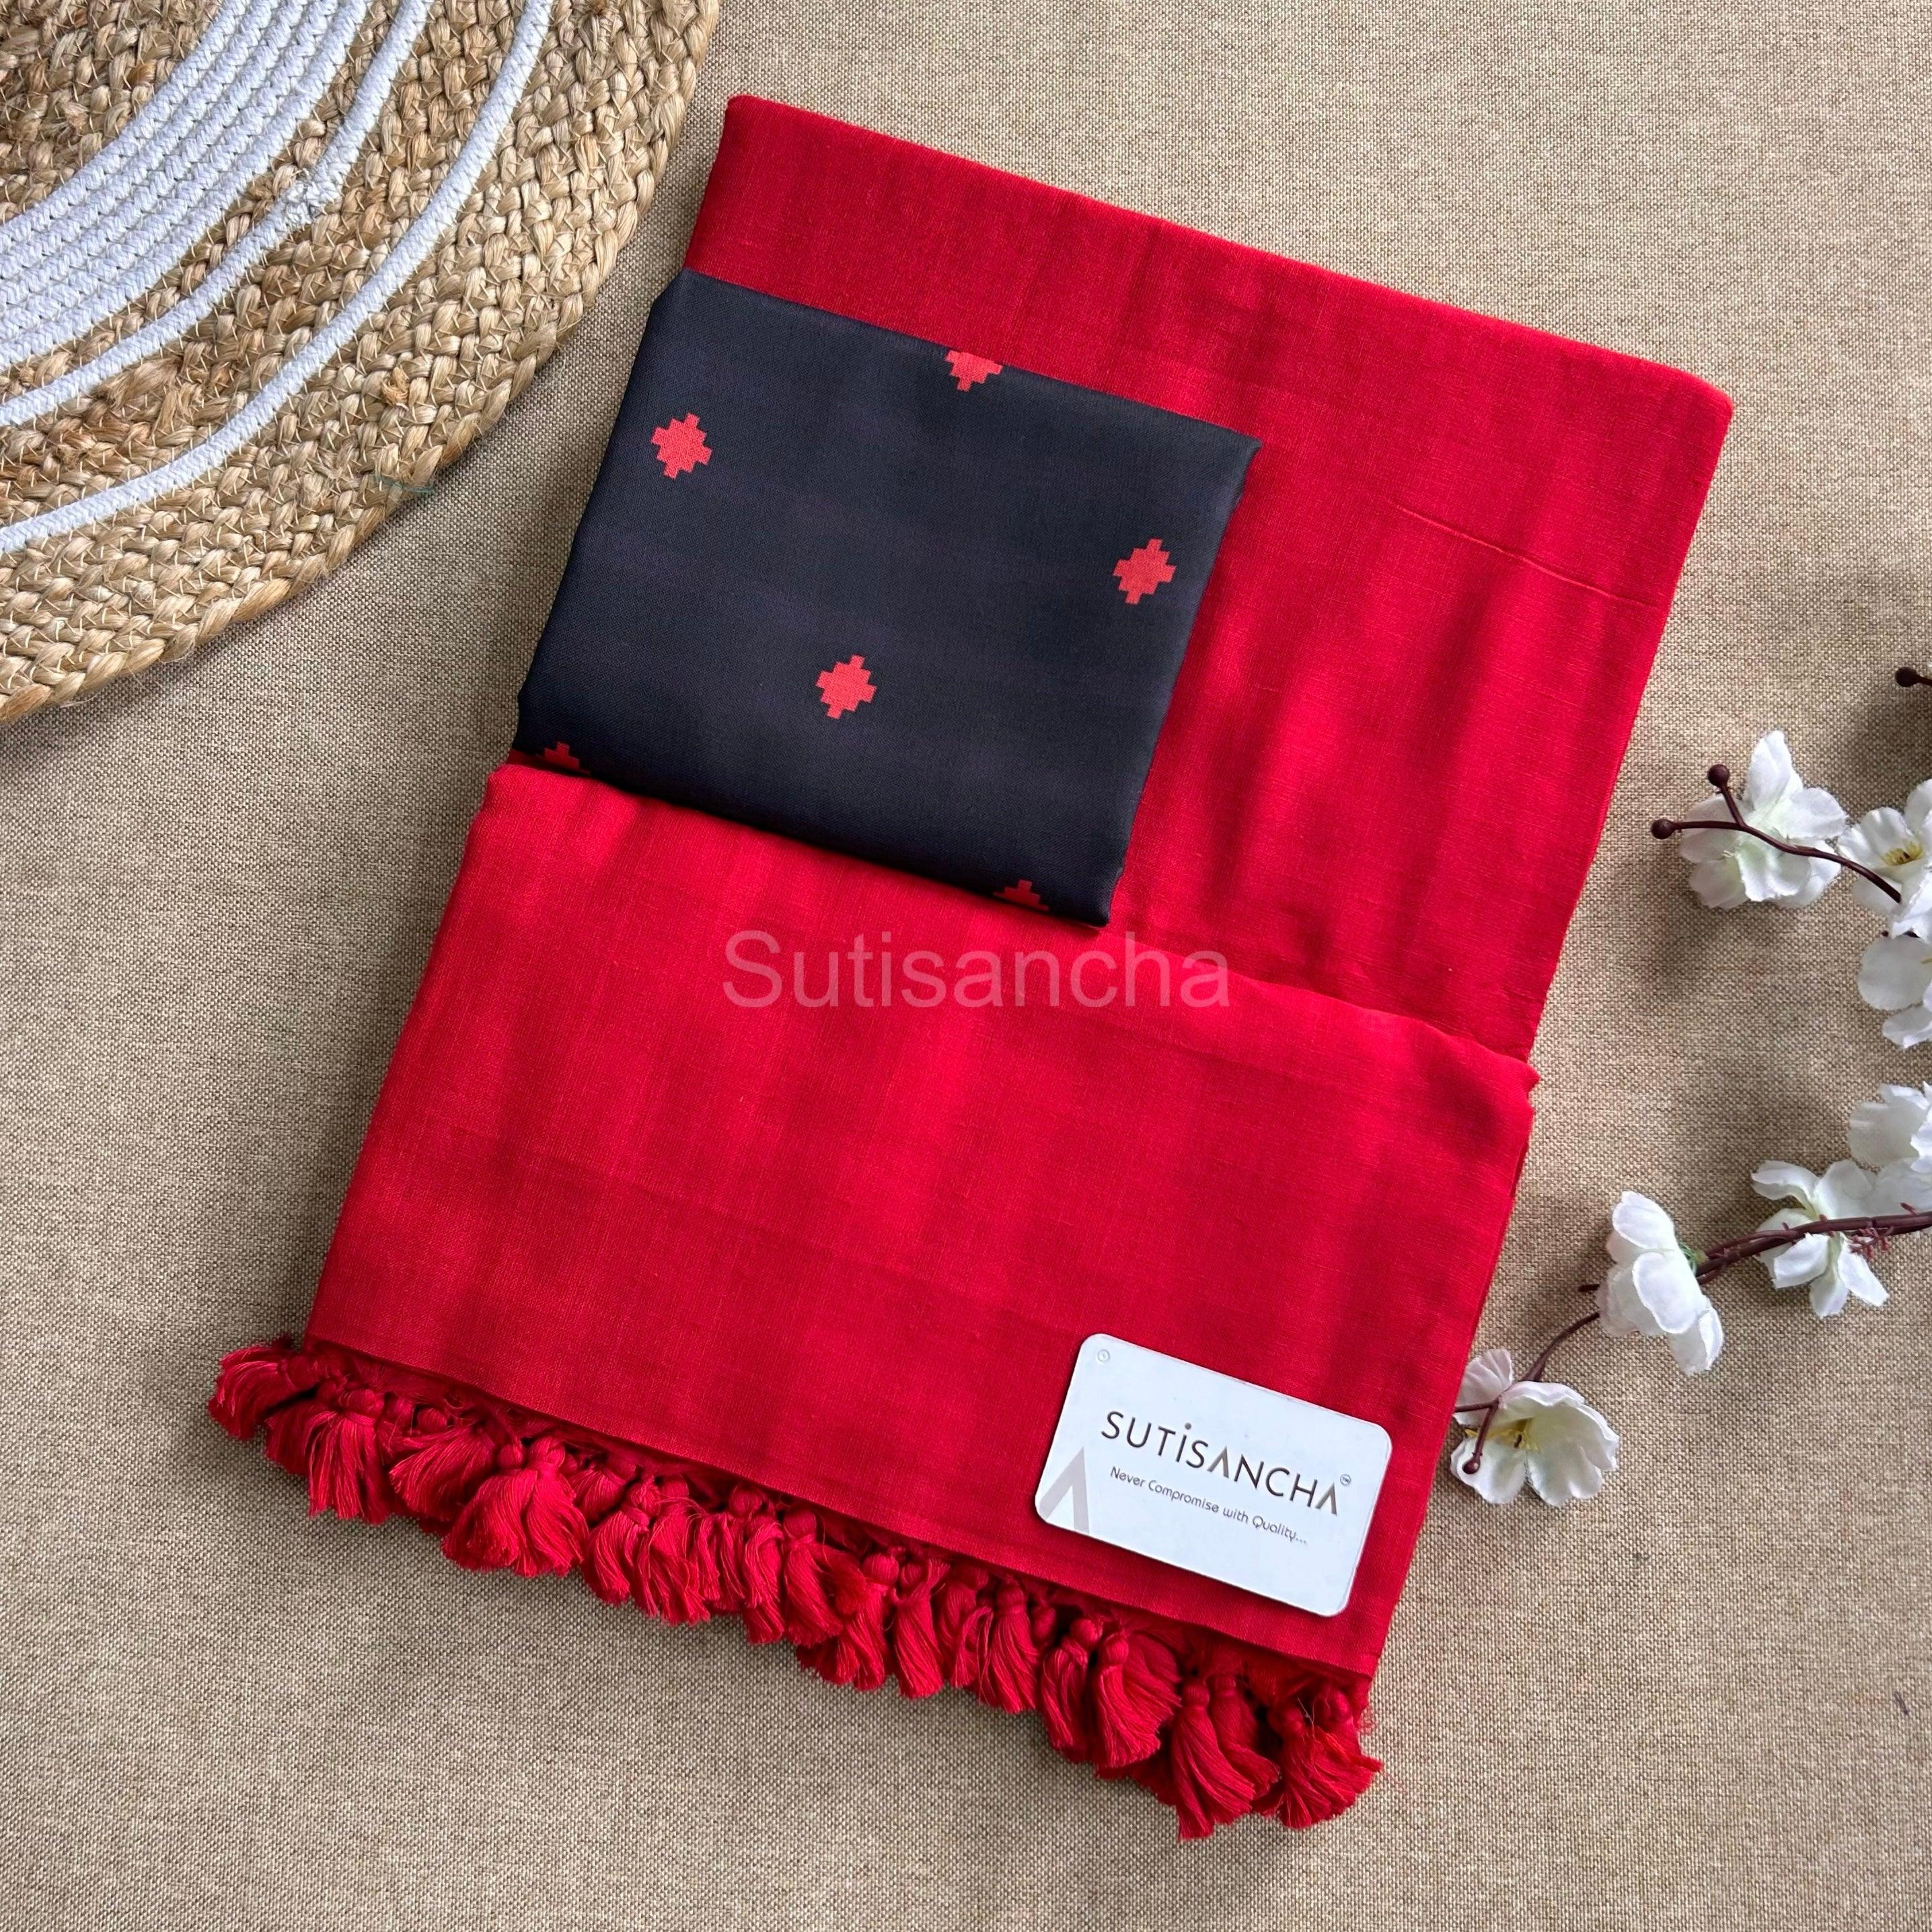 Sutisancha Red Khadi Saree & Black Blouse - Suti Sancha